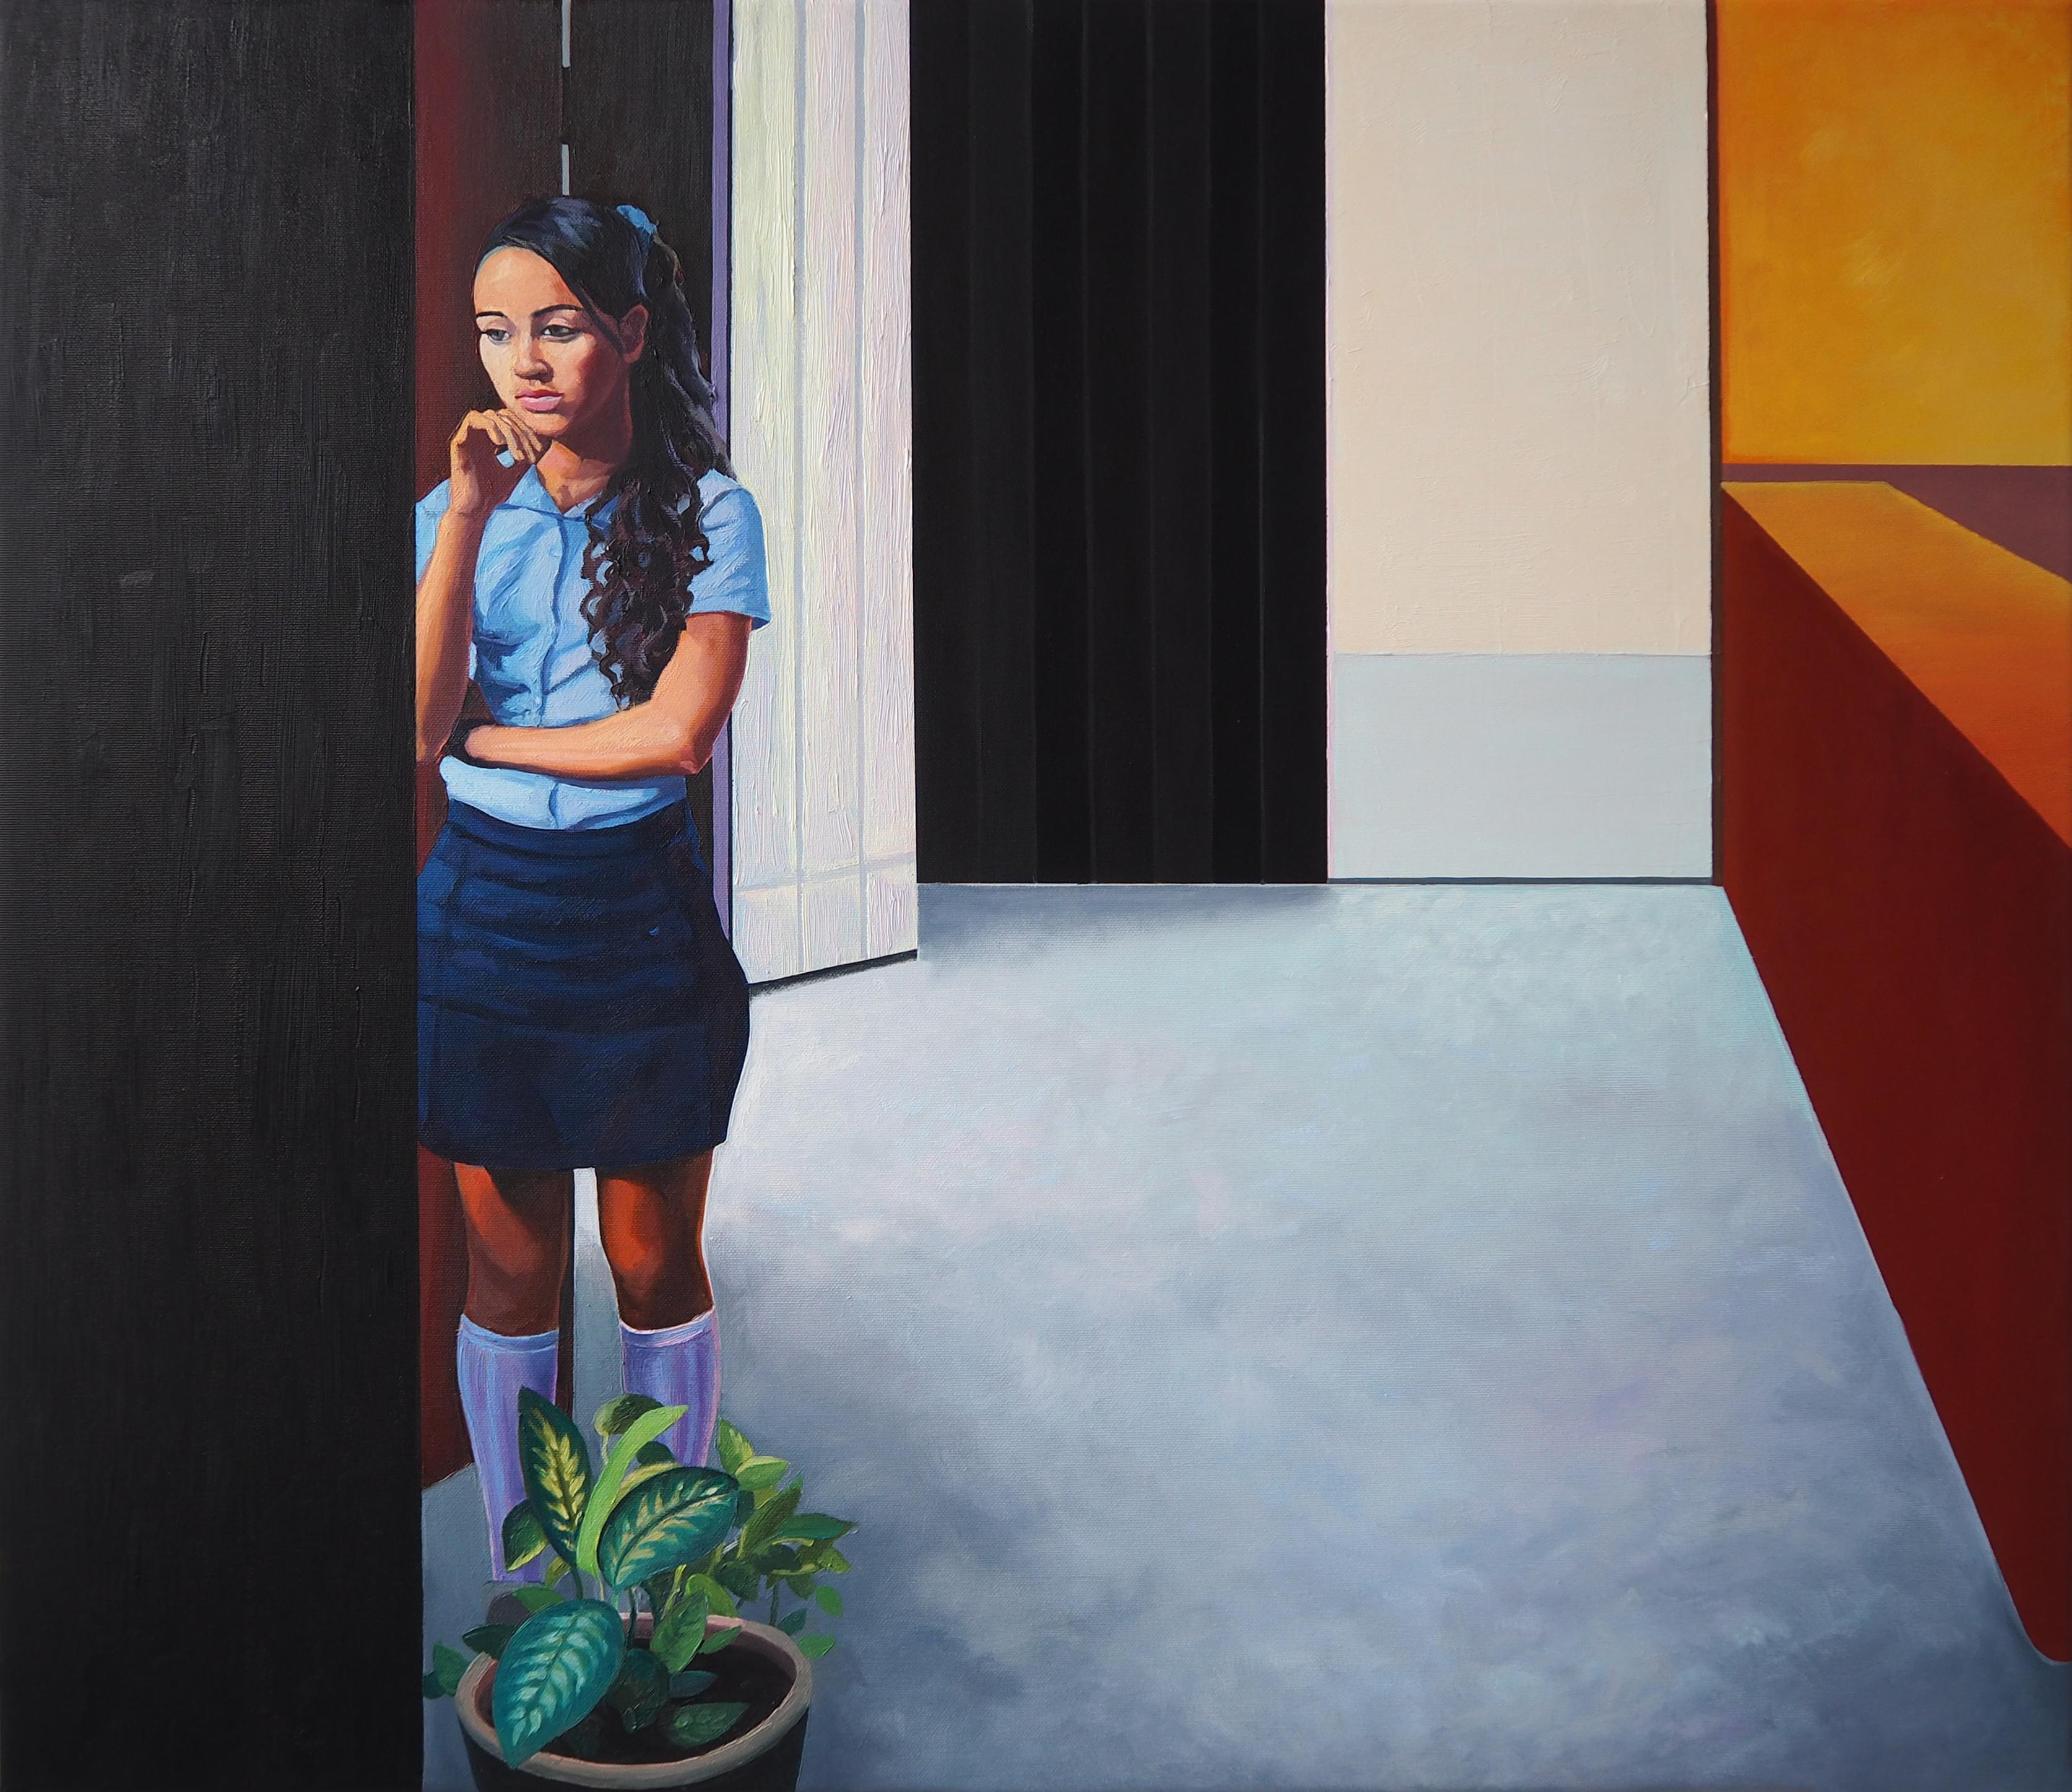 Julita Malinowska Portrait Painting - Pensive Girl - Contemporary Figurative Oil Painting, Modern Women Portrait